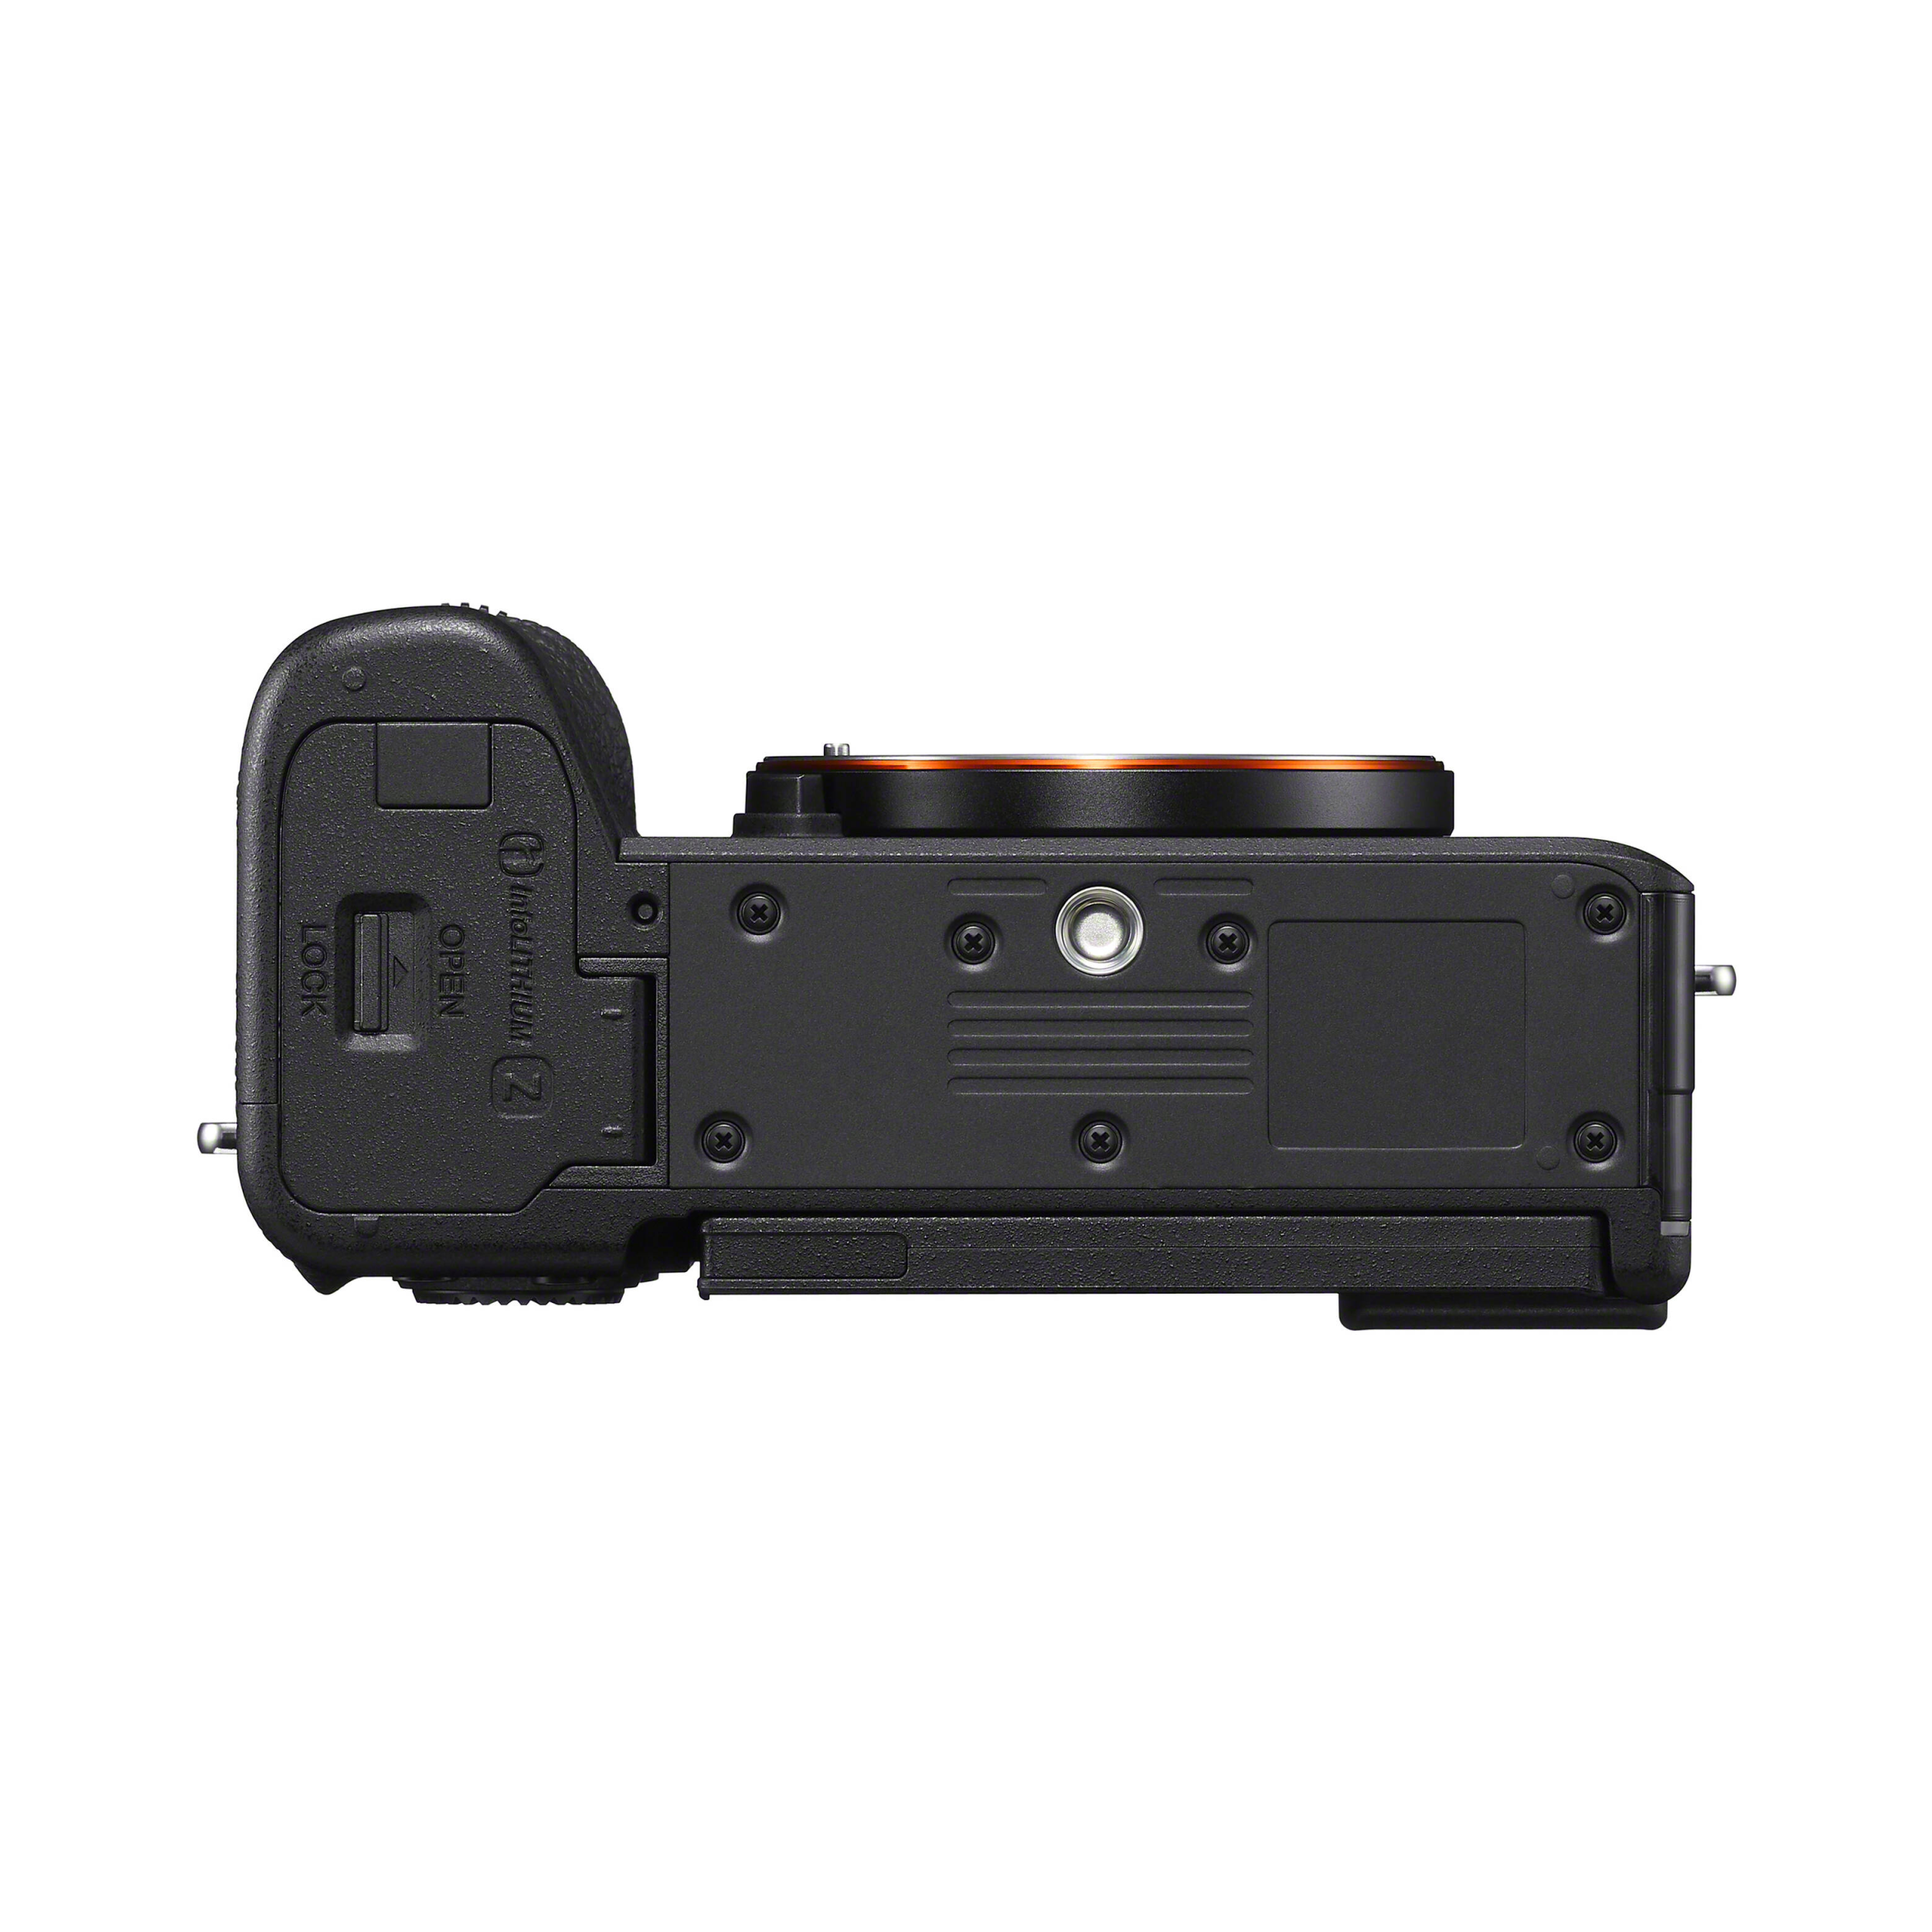 Sony a7CR Mirrorless Camera - Black